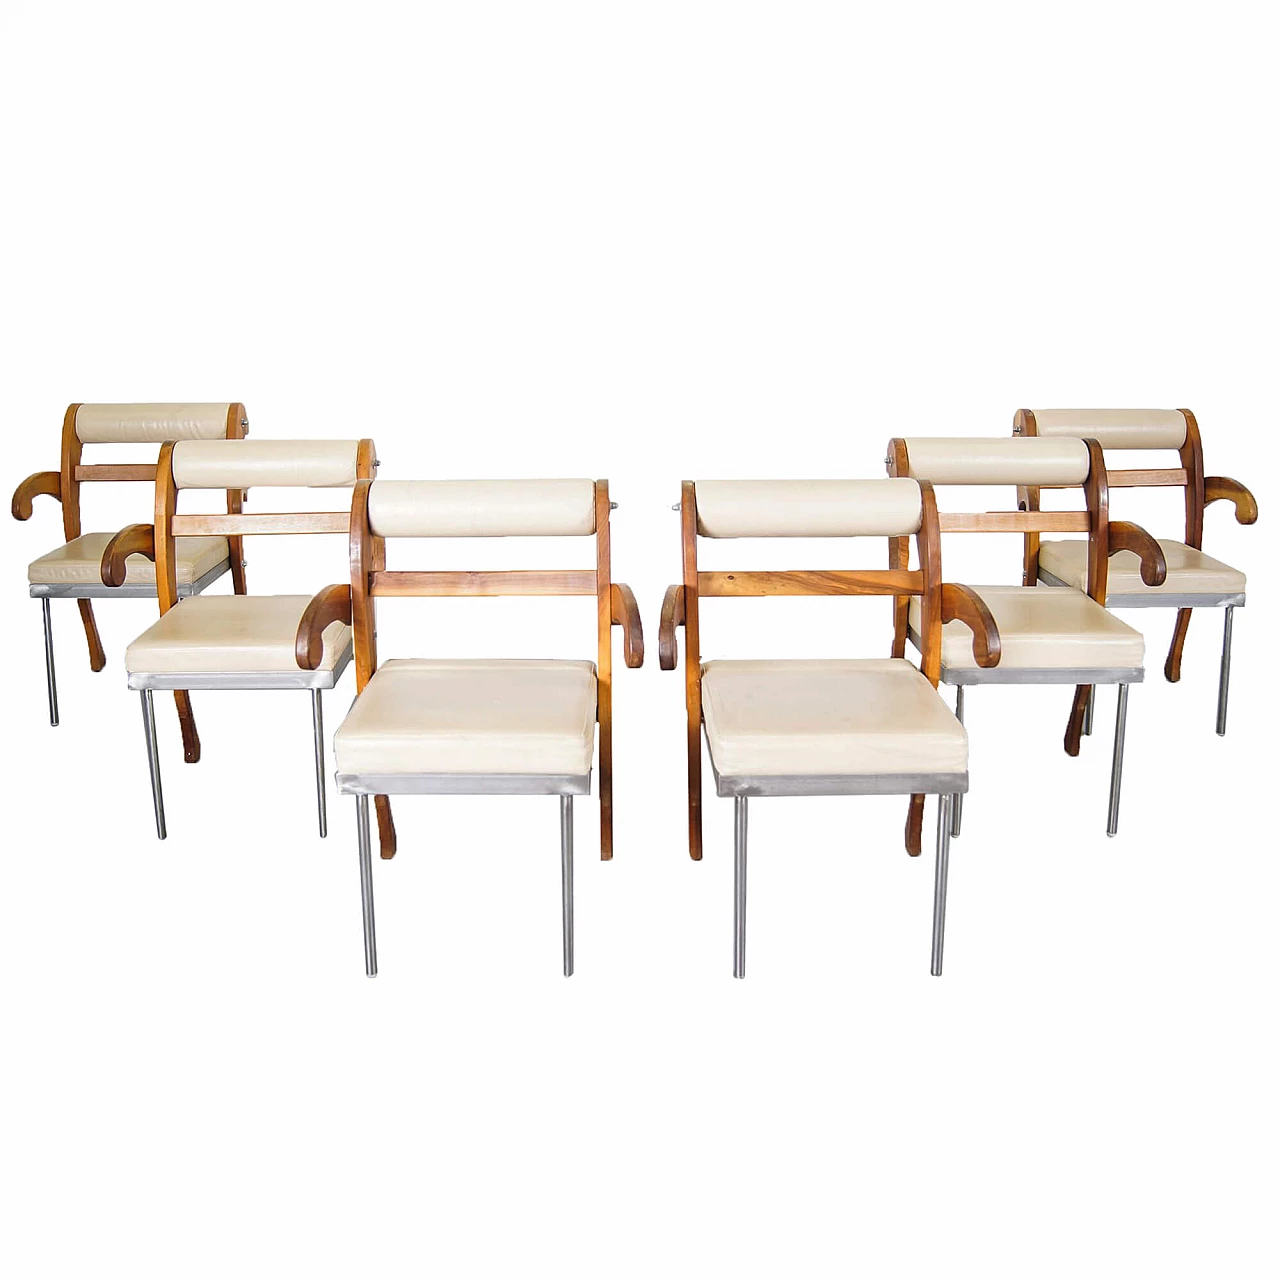 6 Job chairs by Julen Heinz, Switzerland, 1990s 1314442